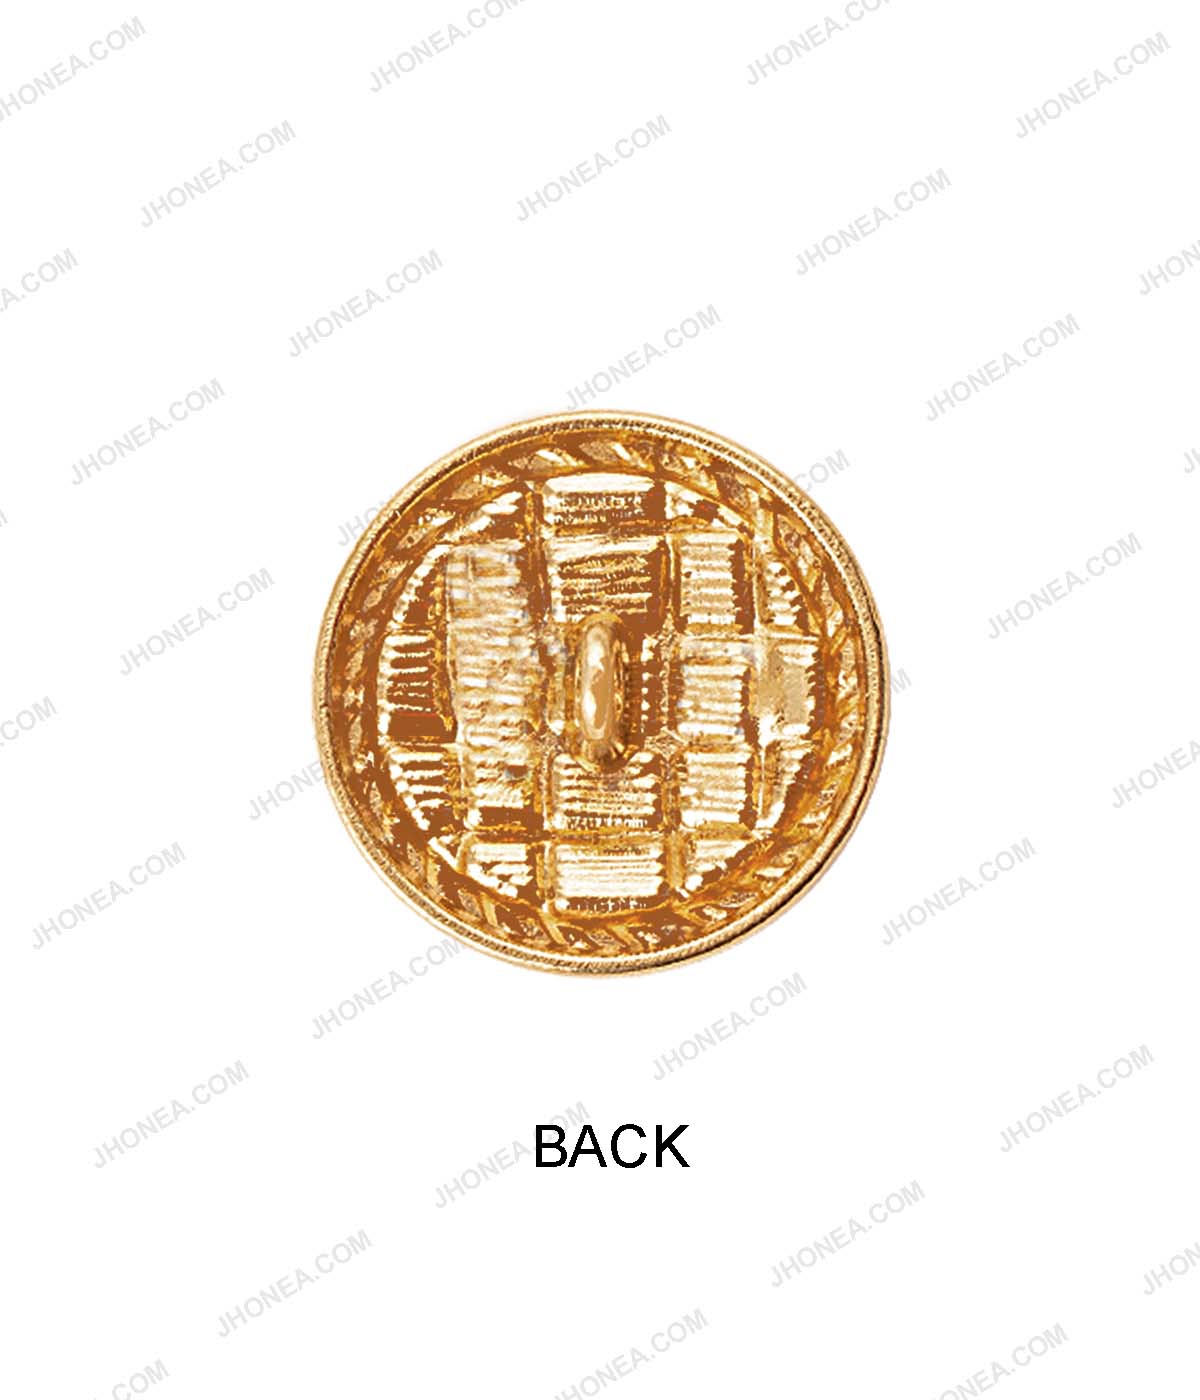 Antique Gold Checks Design Surface Coat Button